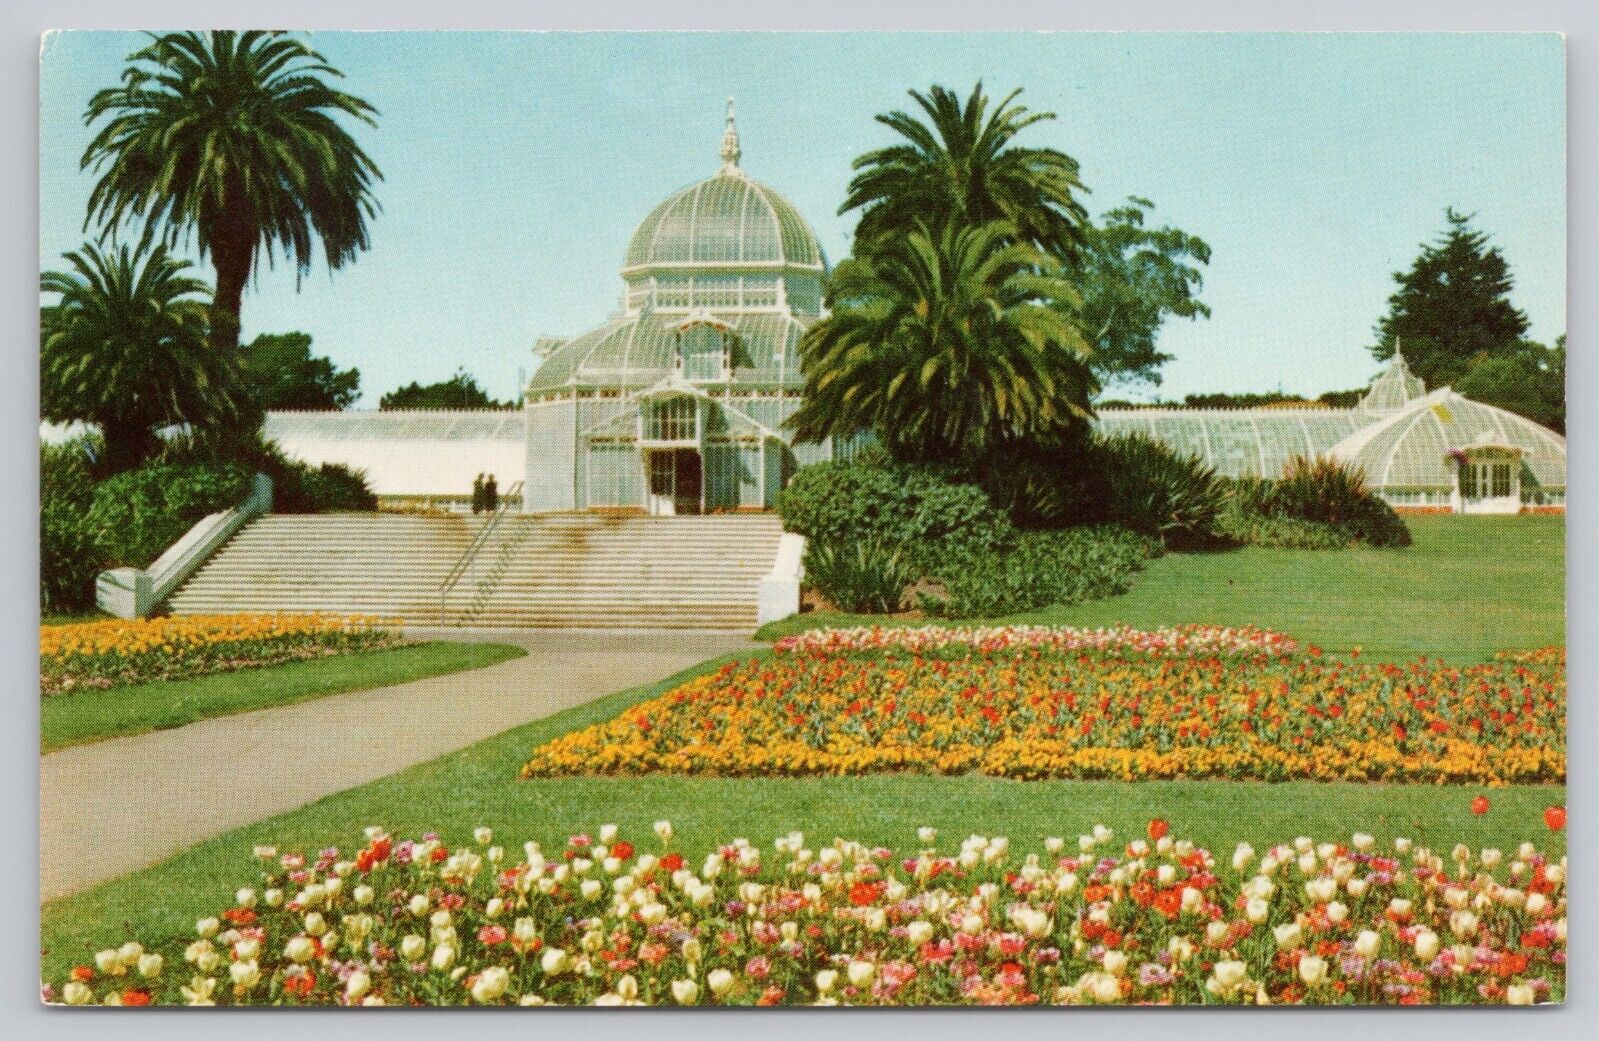 San Francisco California, Golden Gate Park Conservatory, Vintage Postcard